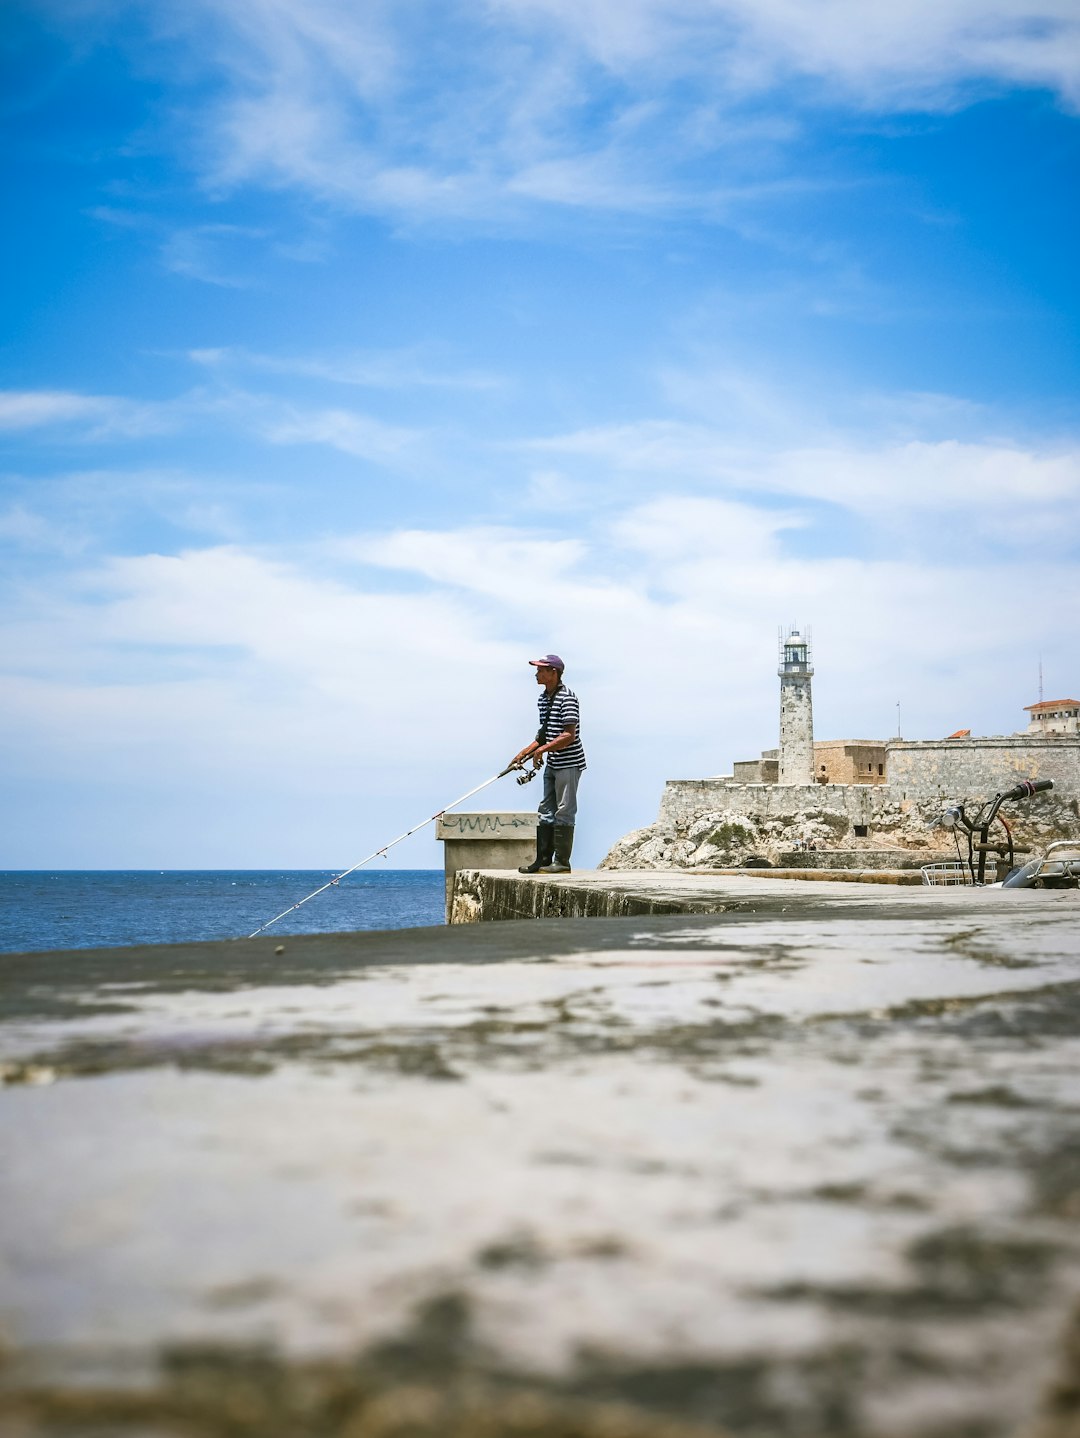 travelers stories about Beach in Havana, Cuba